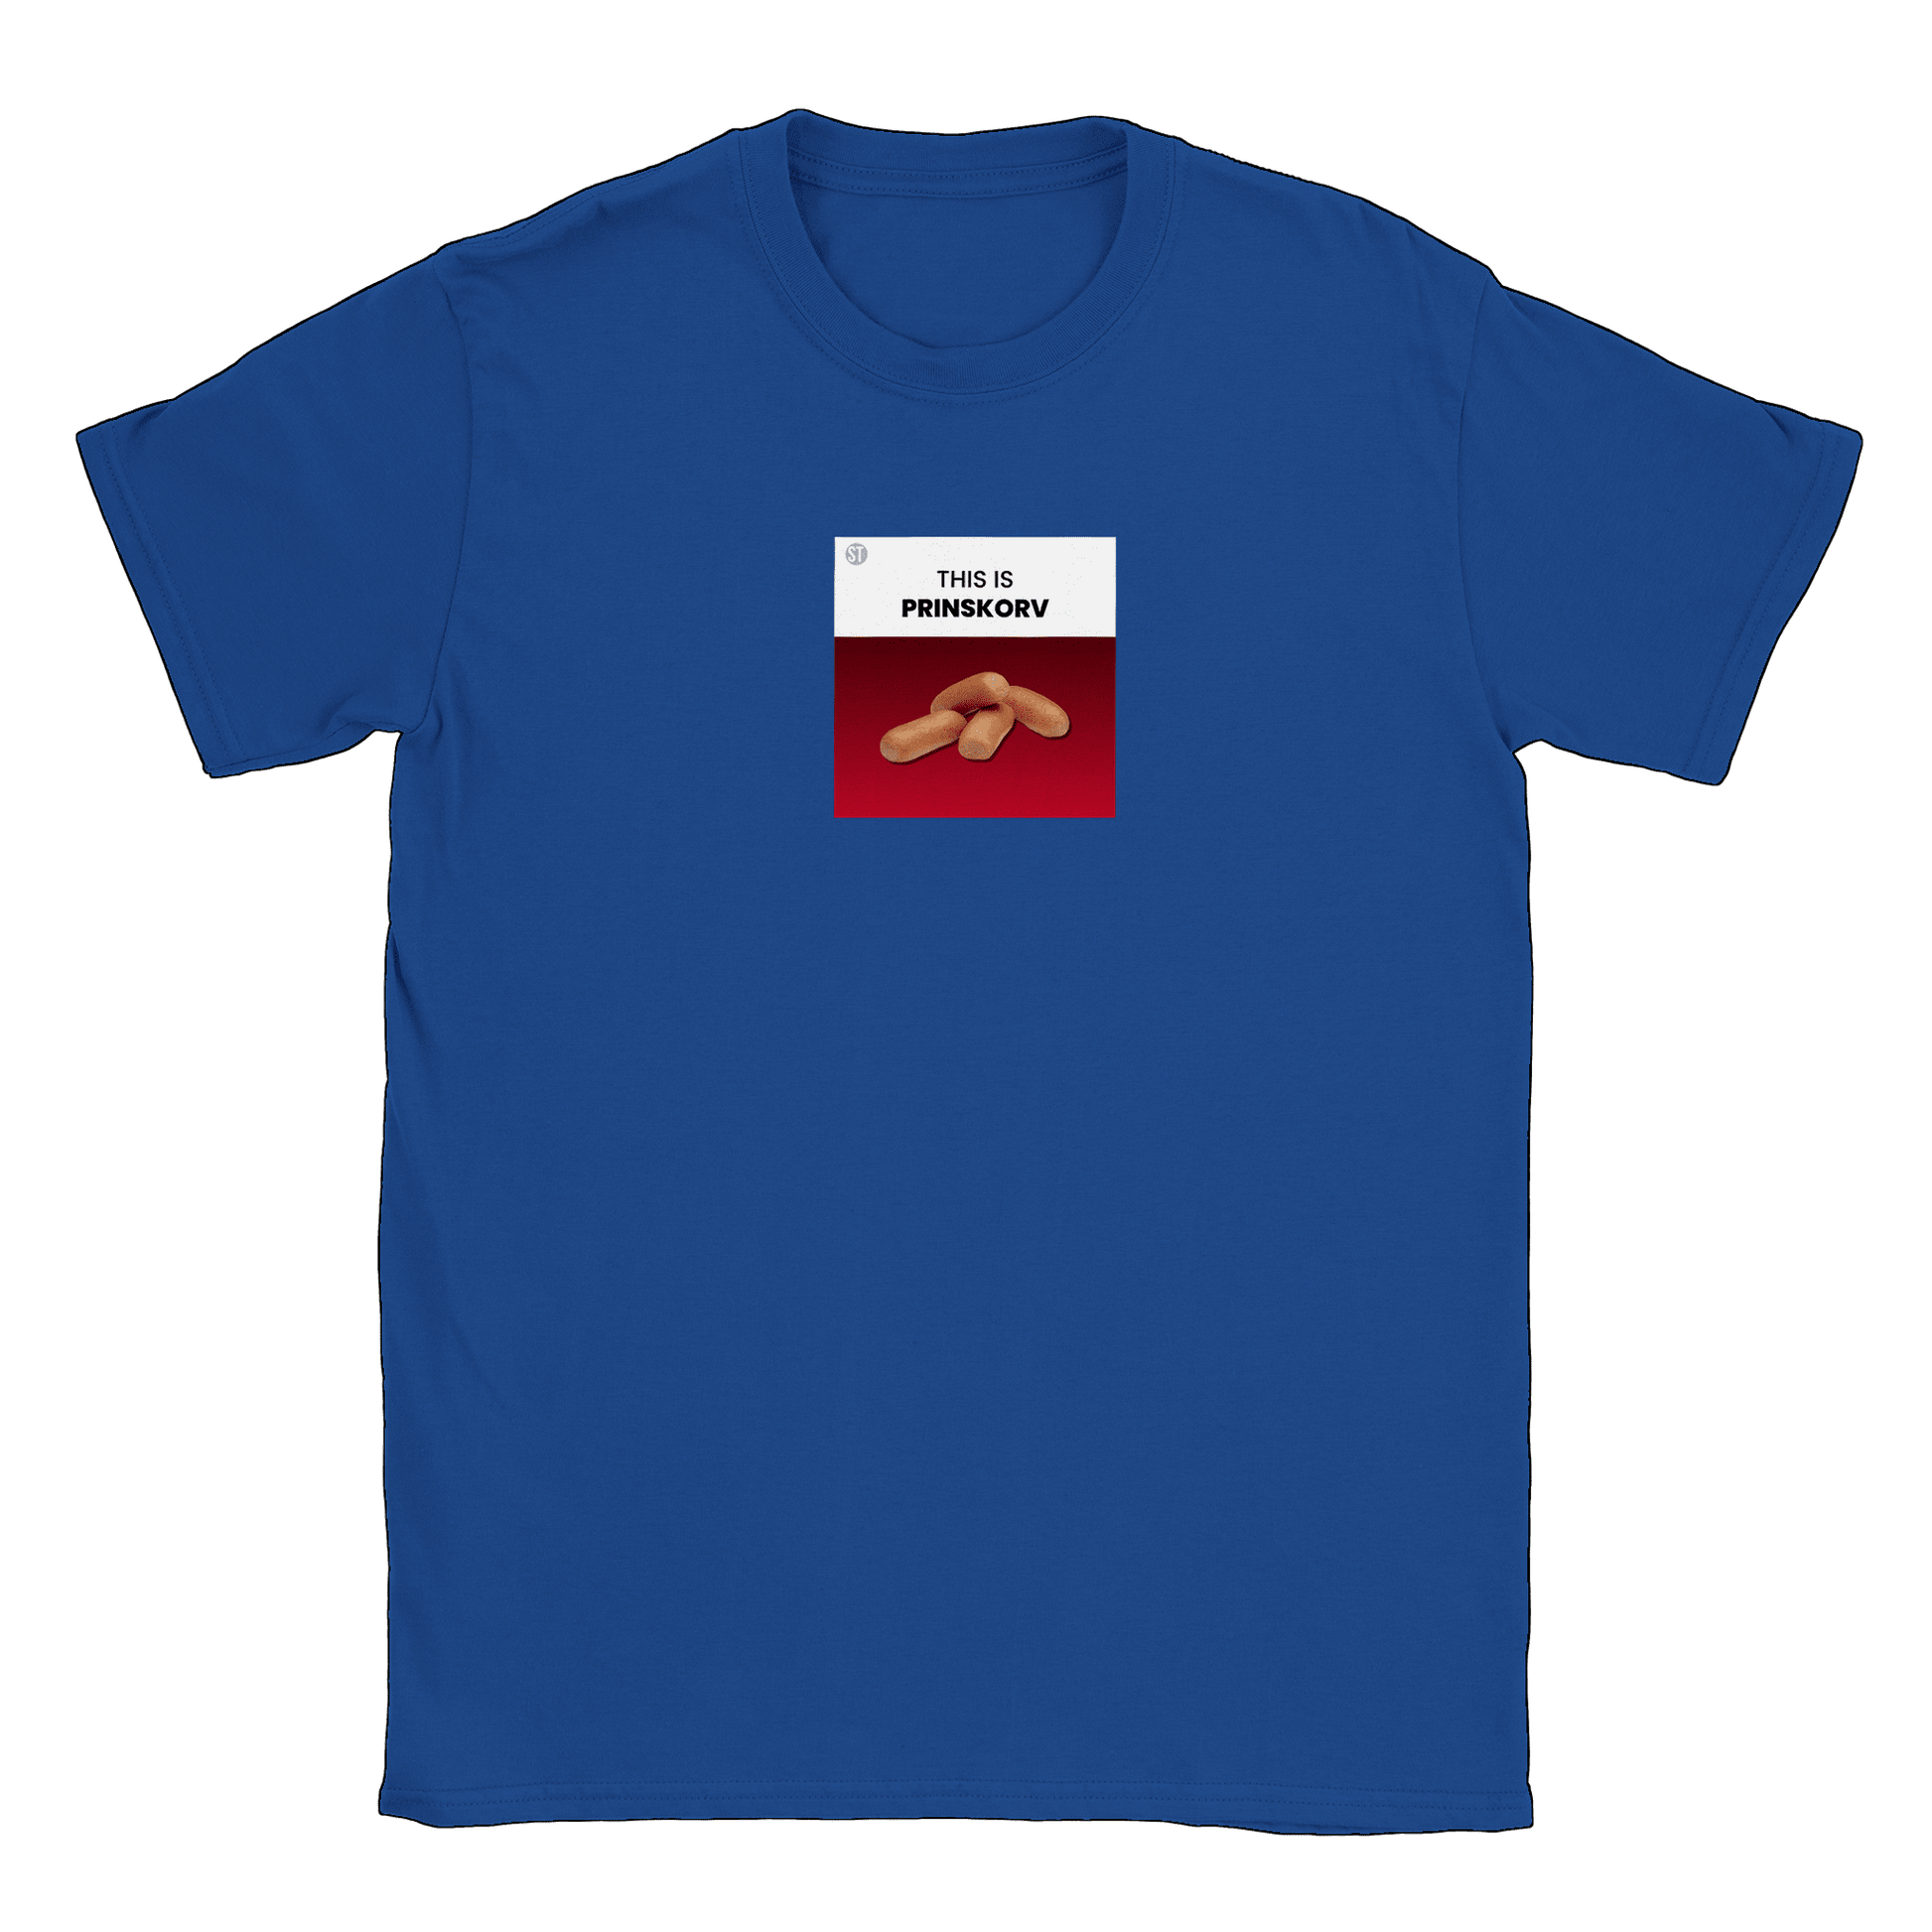 This is Prinskorv - T-shirt Royal